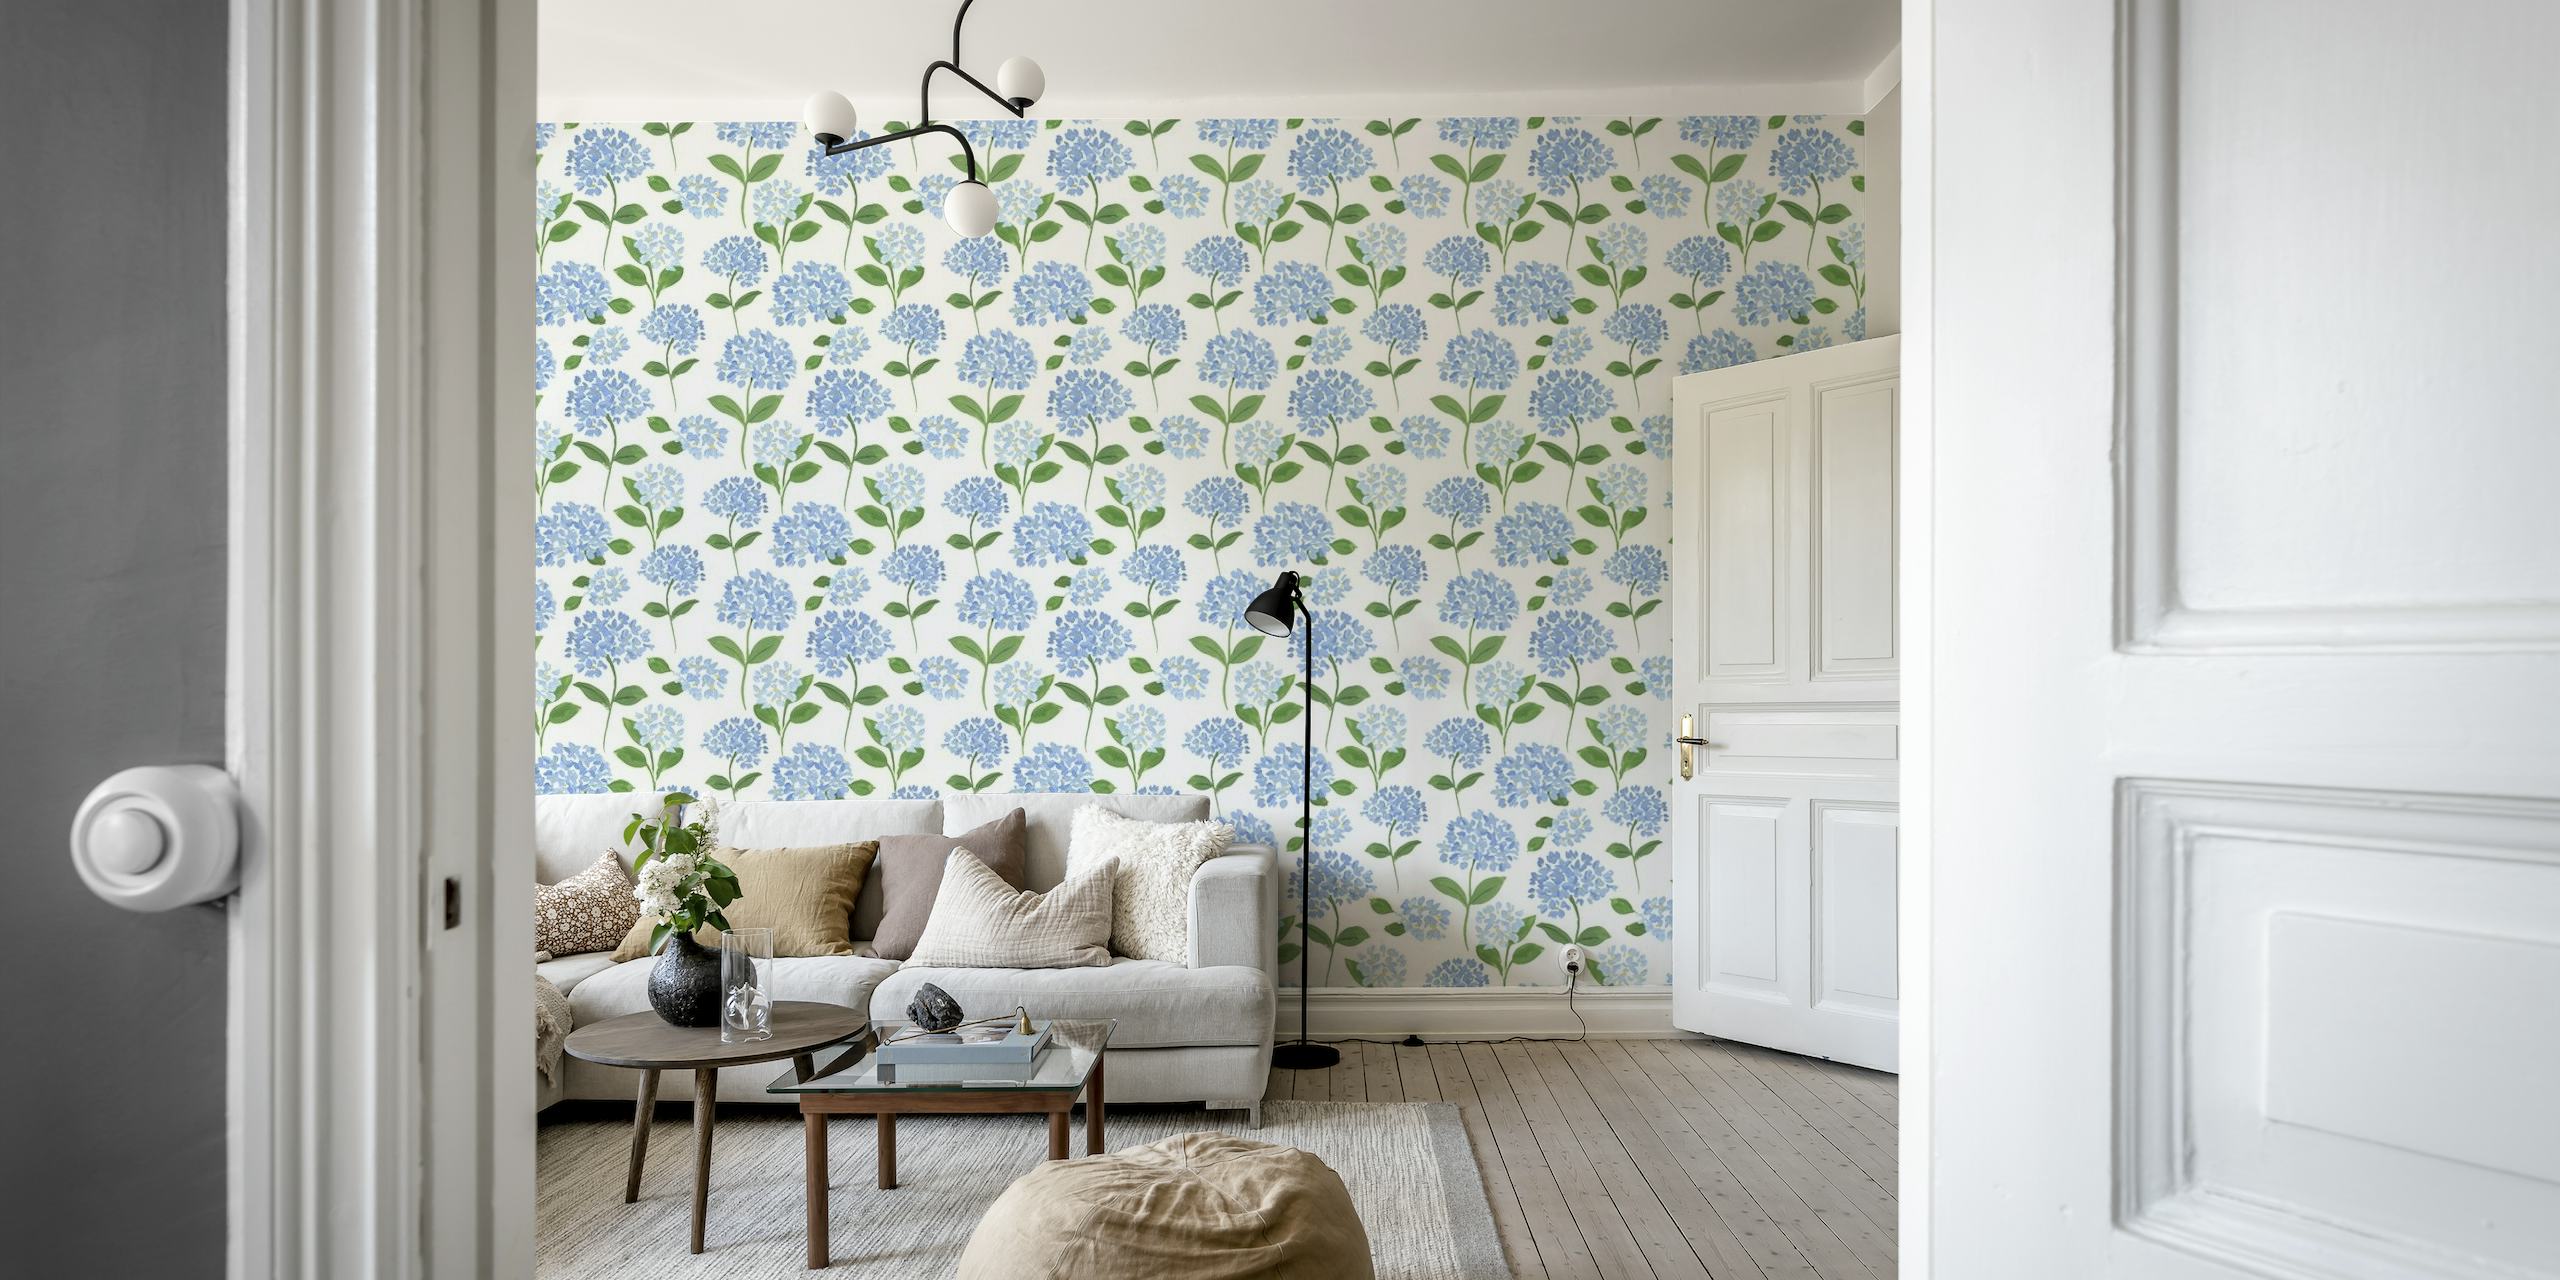 Blue Hydrangea Wallpaper papel pintado